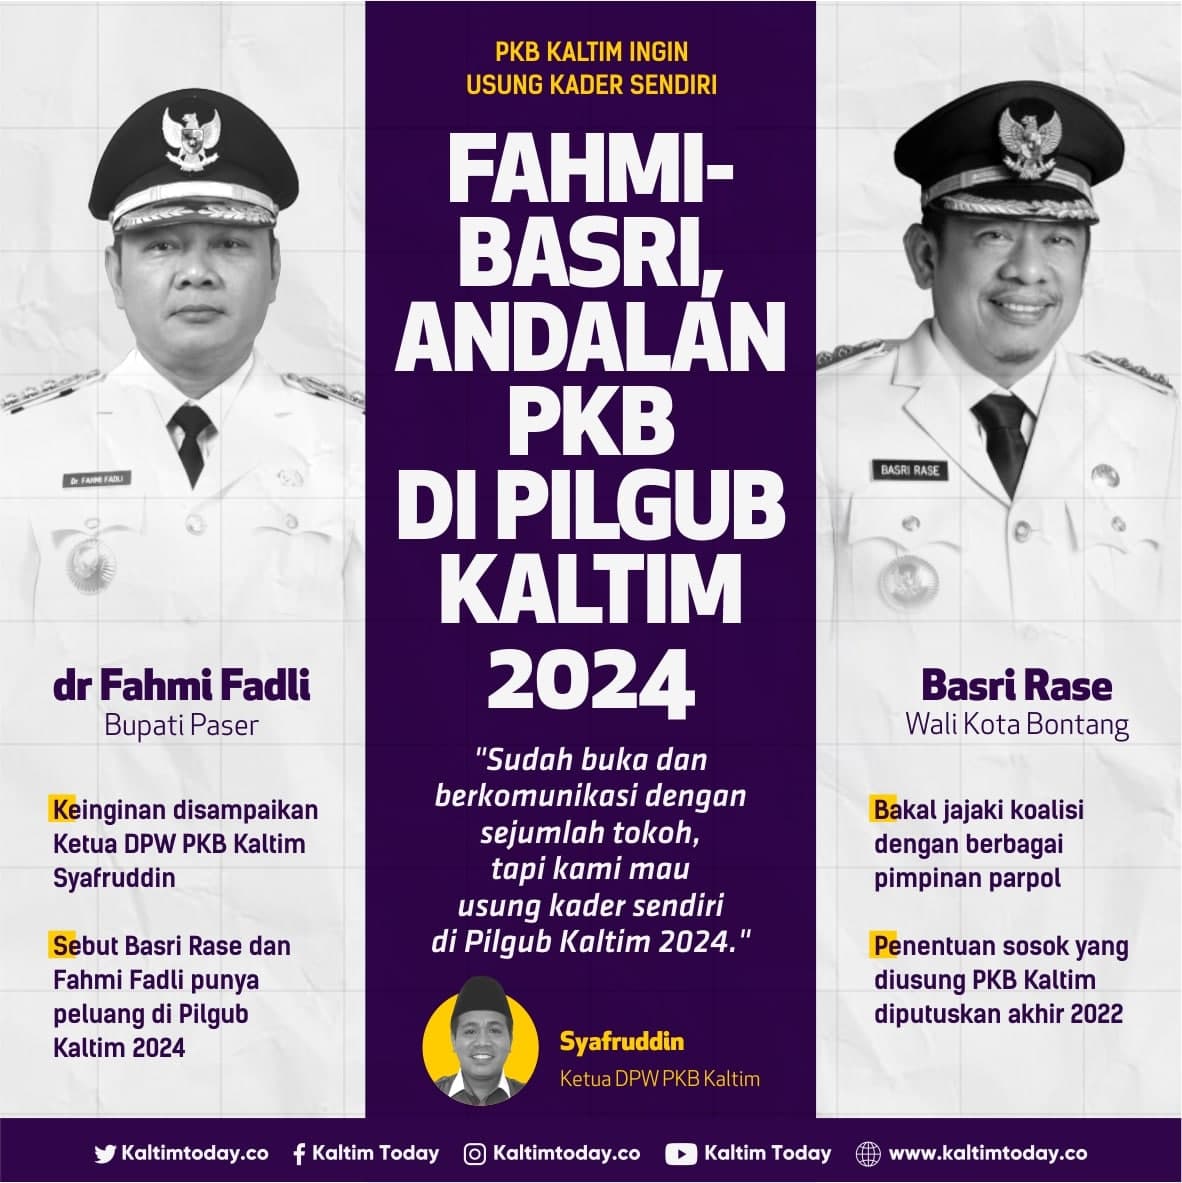 Fahmi-Basri, Andalan PKB di Pilgub Kaltim 2024